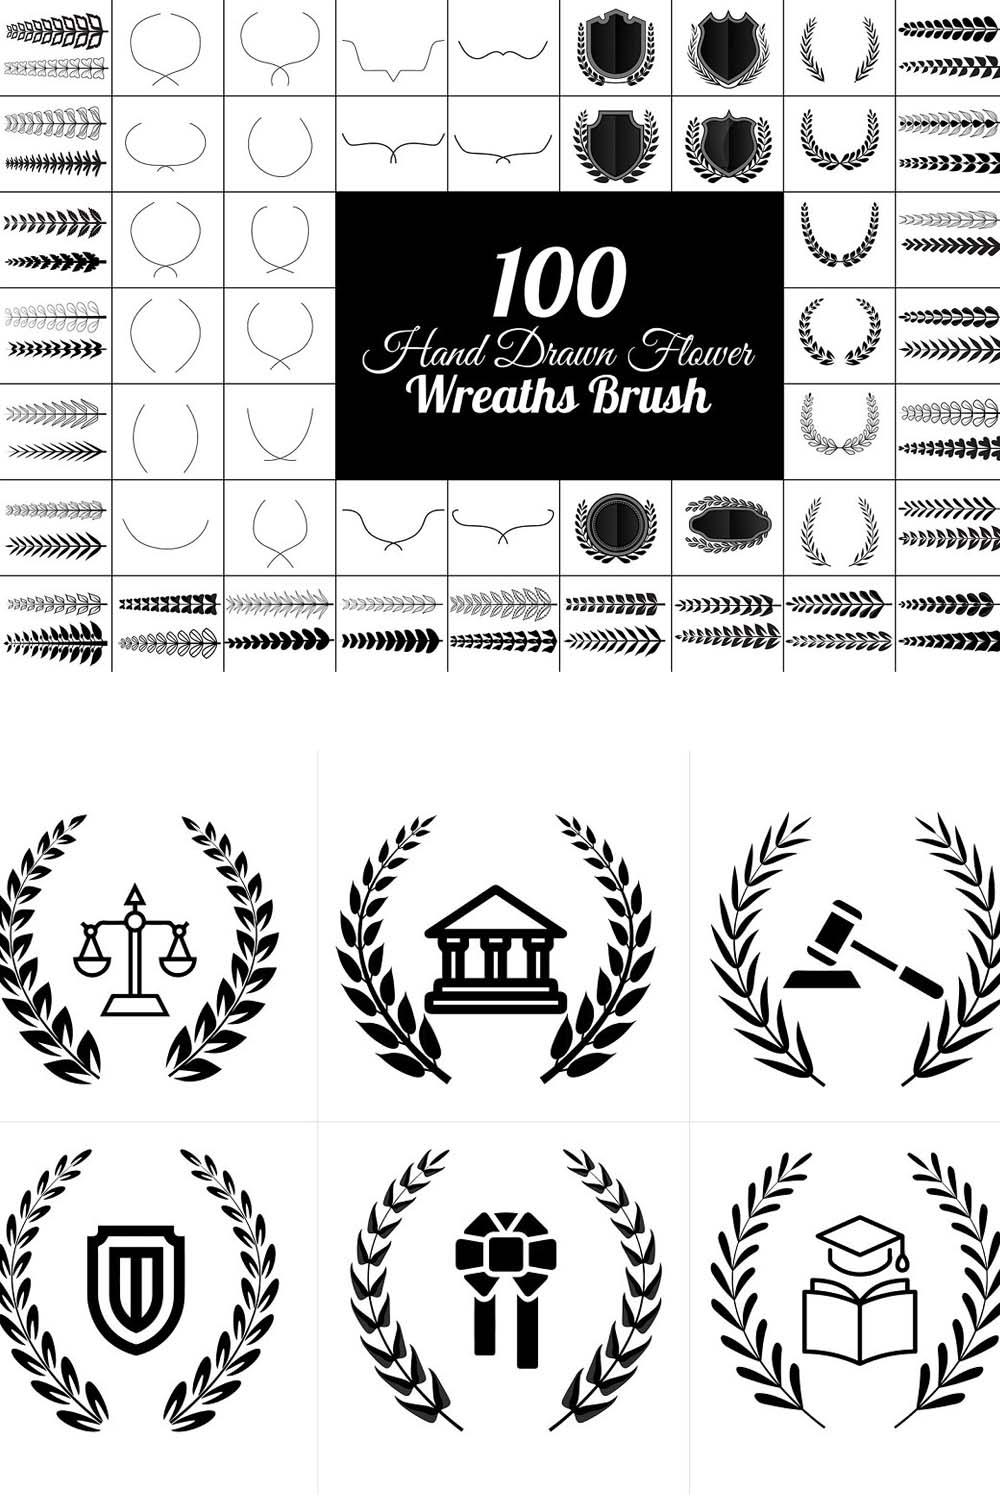 100 Hand Drawn Wreaths Brush Bundle pinterest preview image.